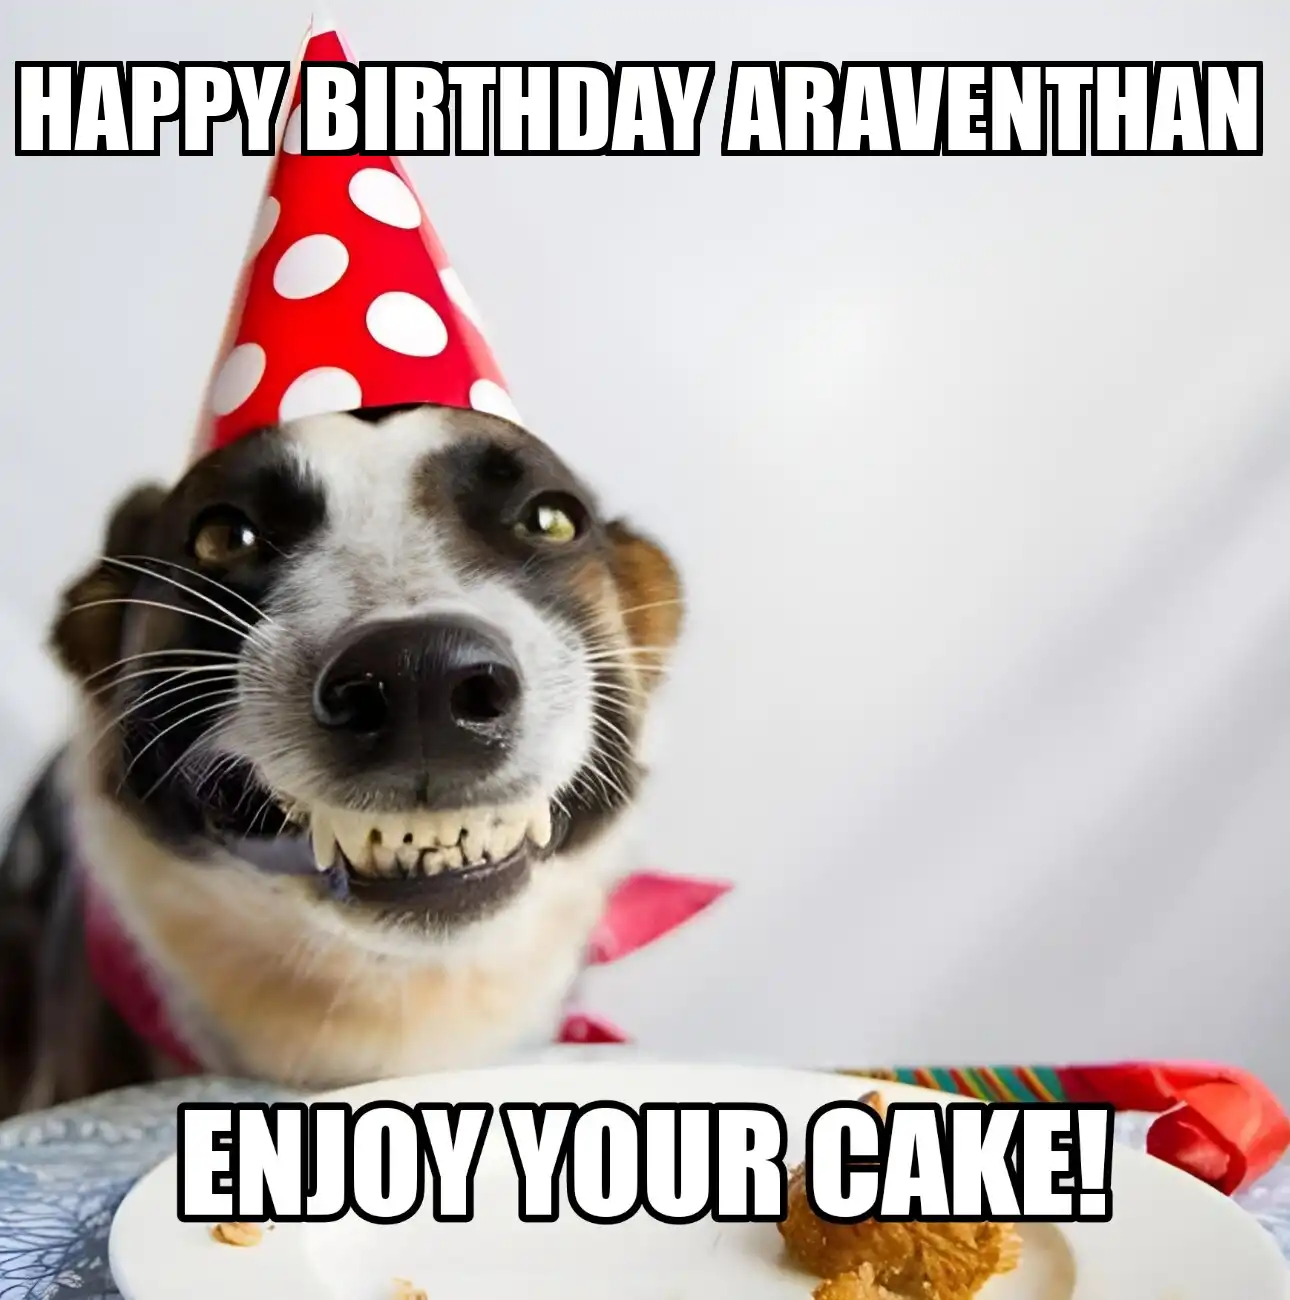 Happy Birthday Araventhan Enjoy Your Cake Dog Meme